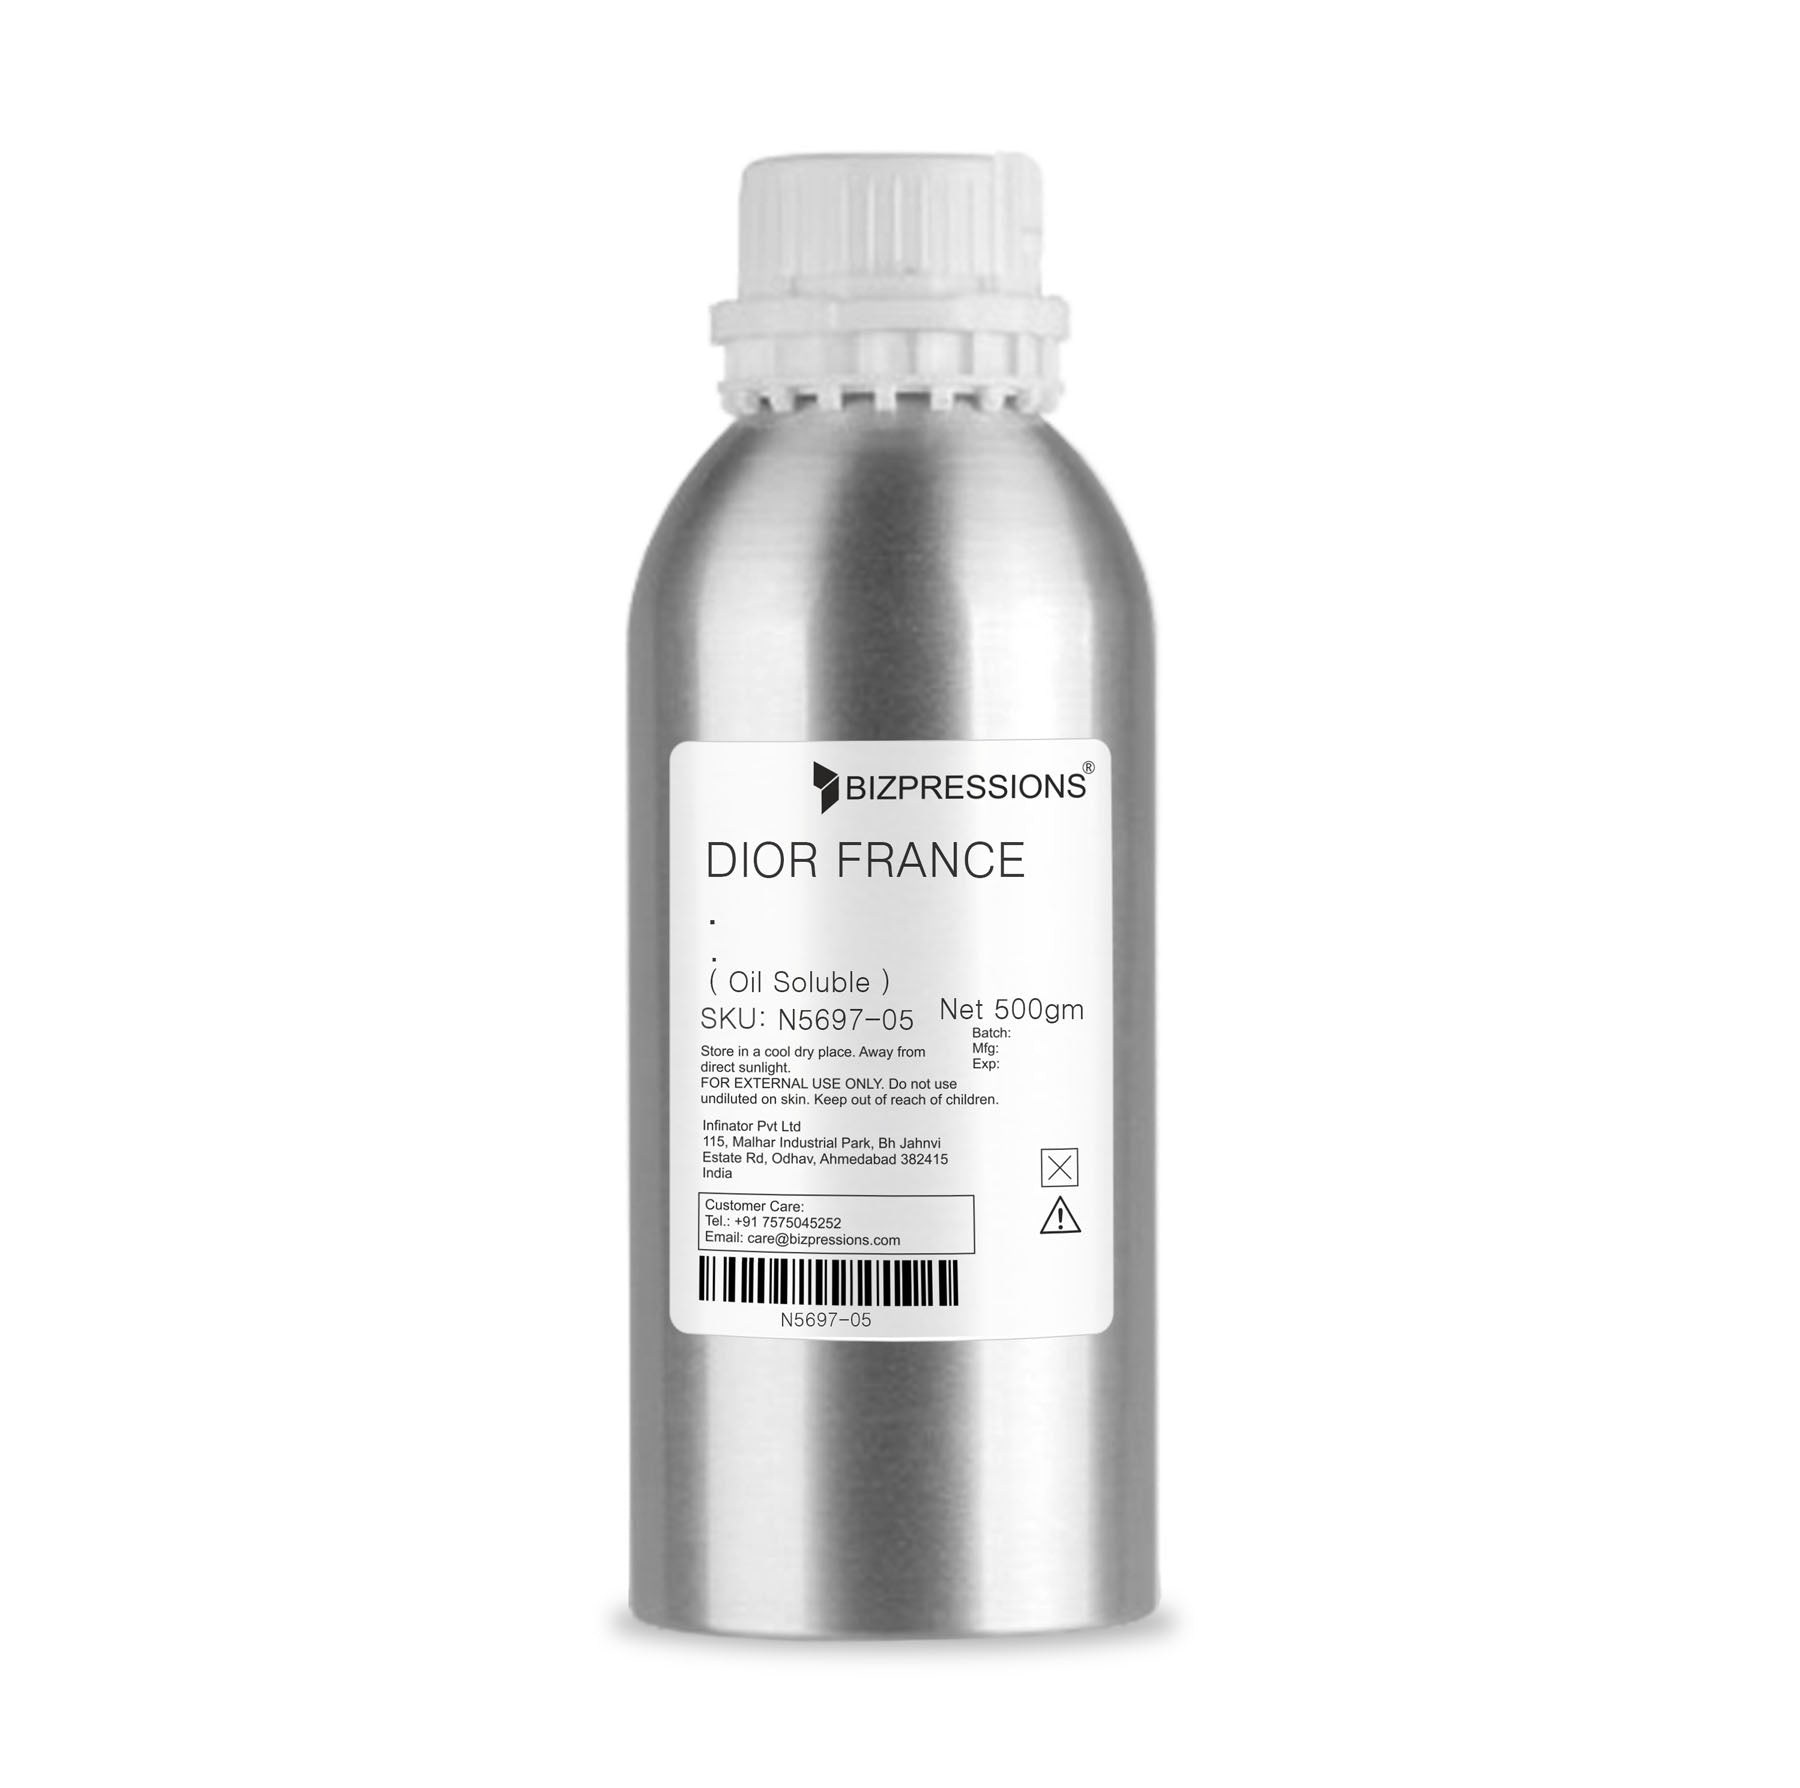 DIOR FRANCE - Fragrance ( Oil Soluble ) - 500 gm